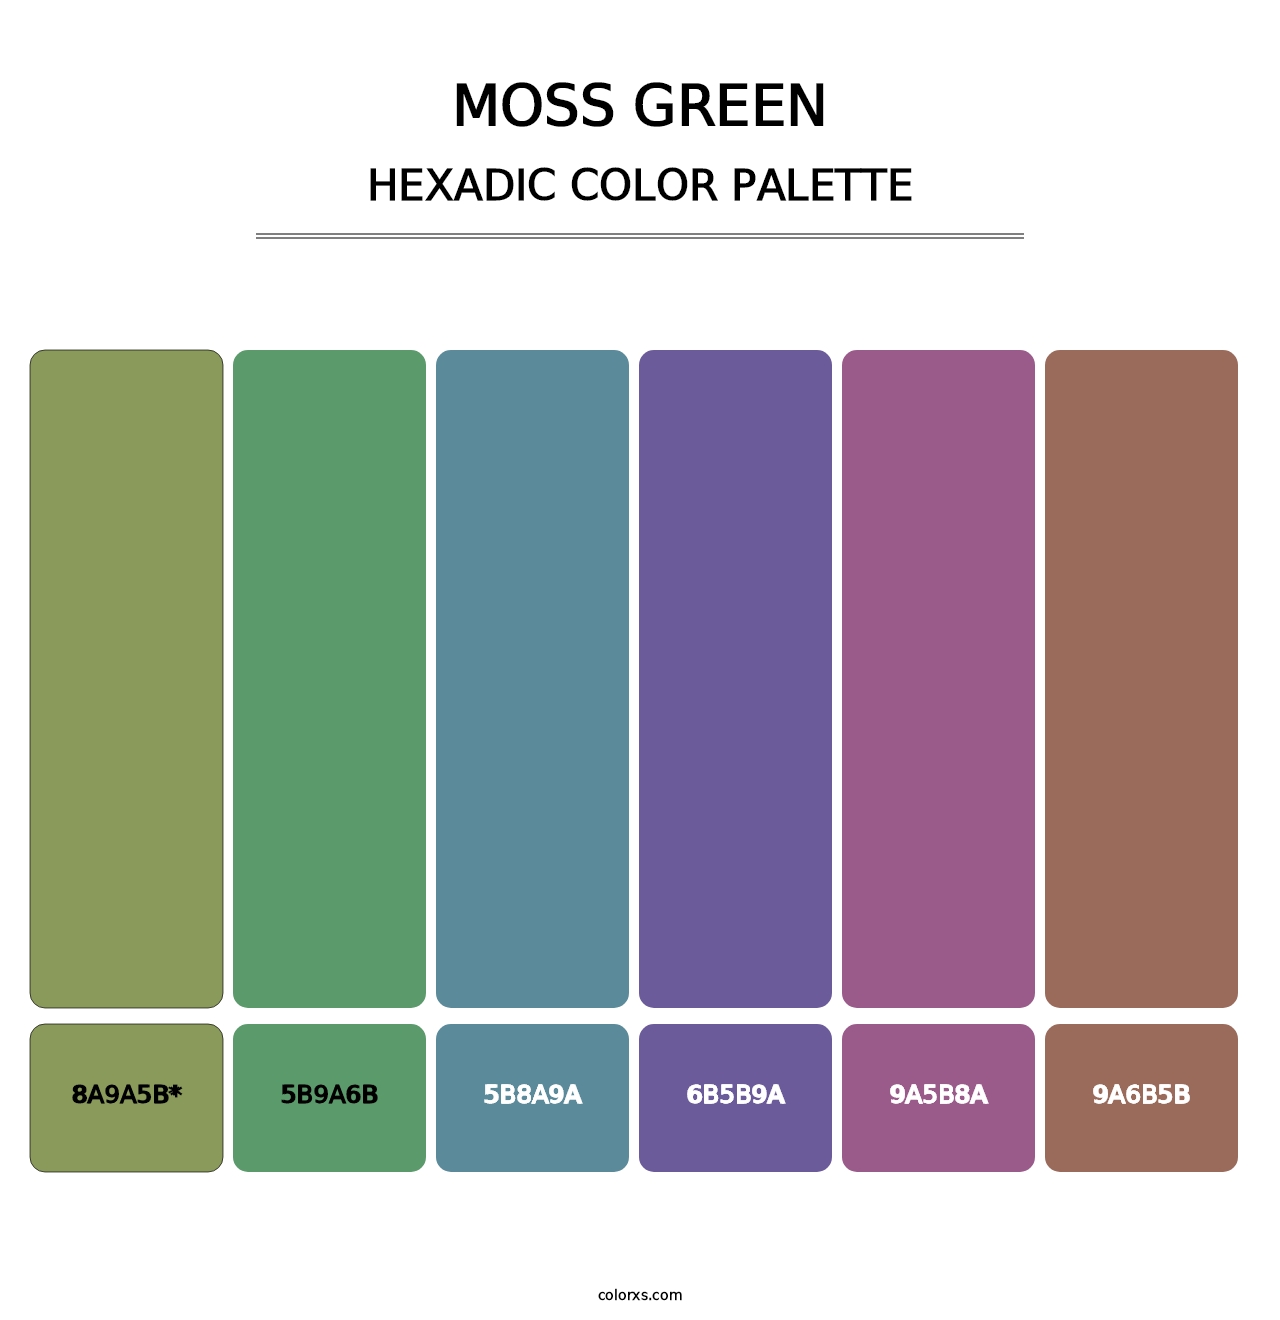 Moss Green - Hexadic Color Palette